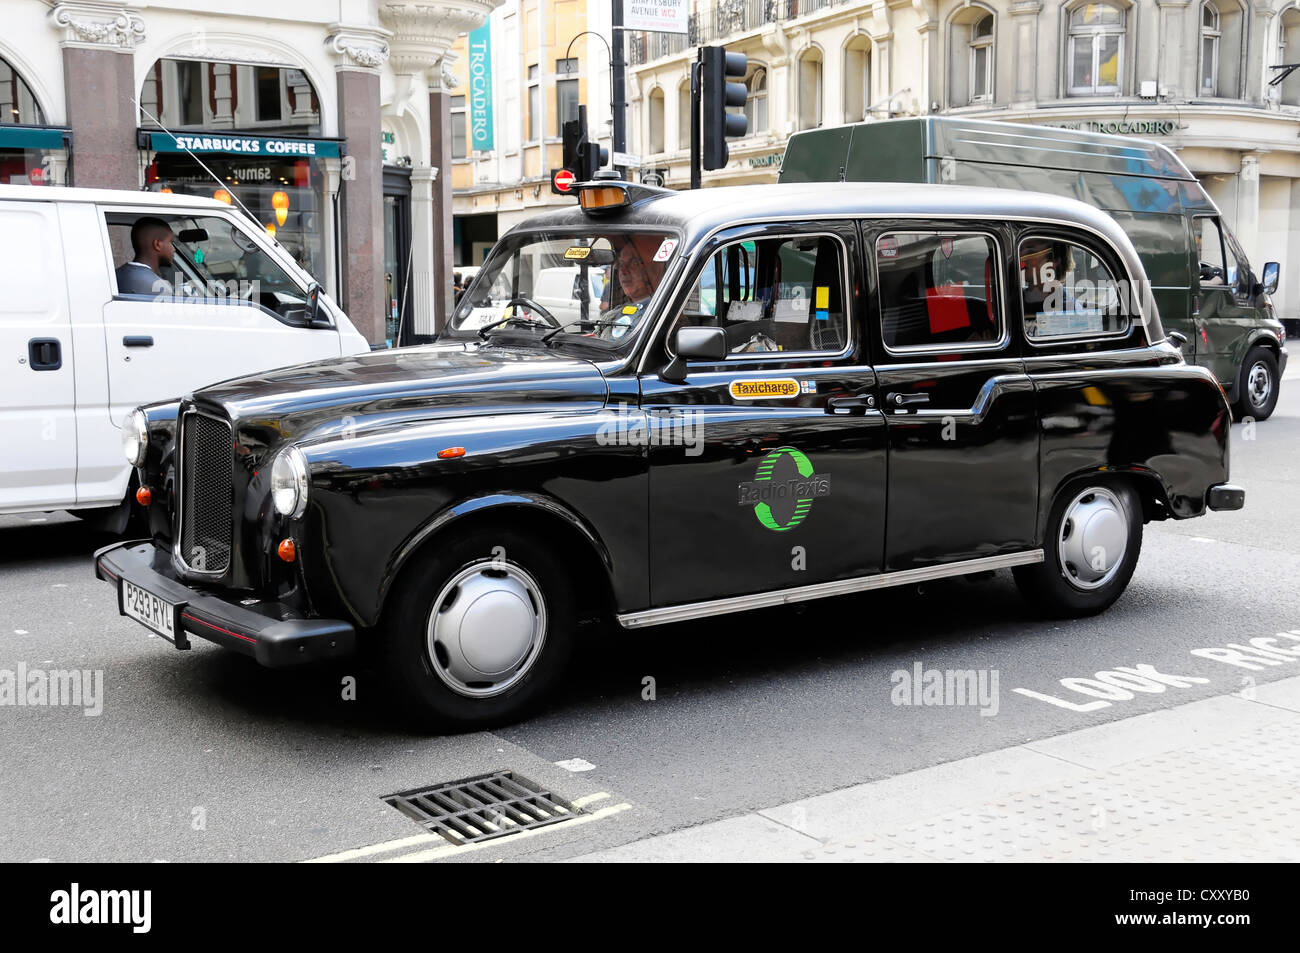 Radio Taxis, London taxi, London, England, United Kingdom, Europe Stock Photo